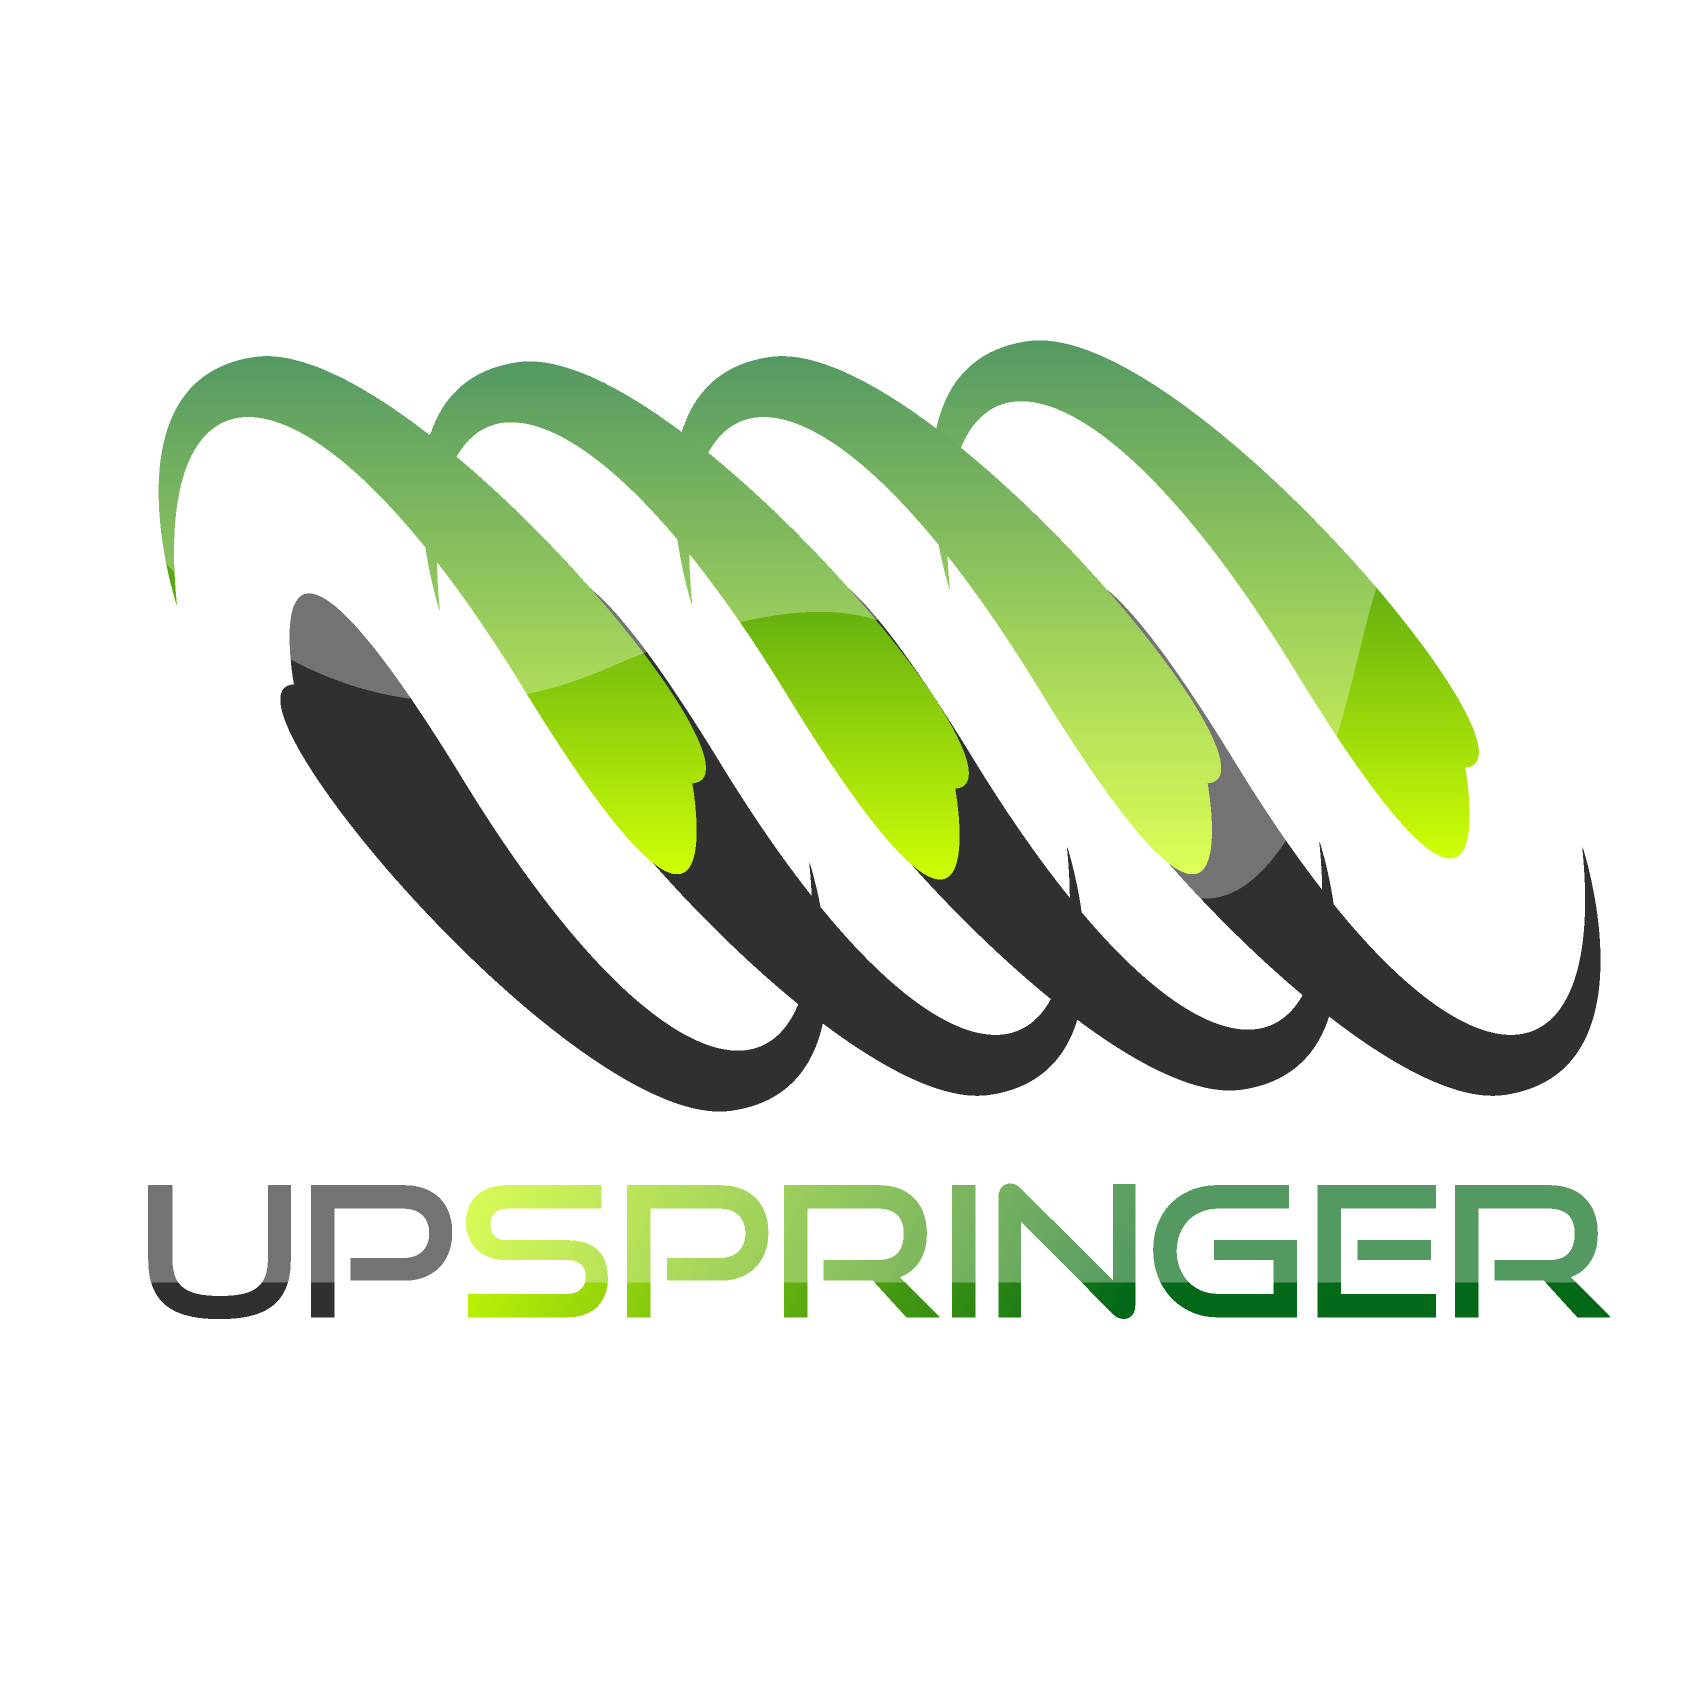 Upspringer